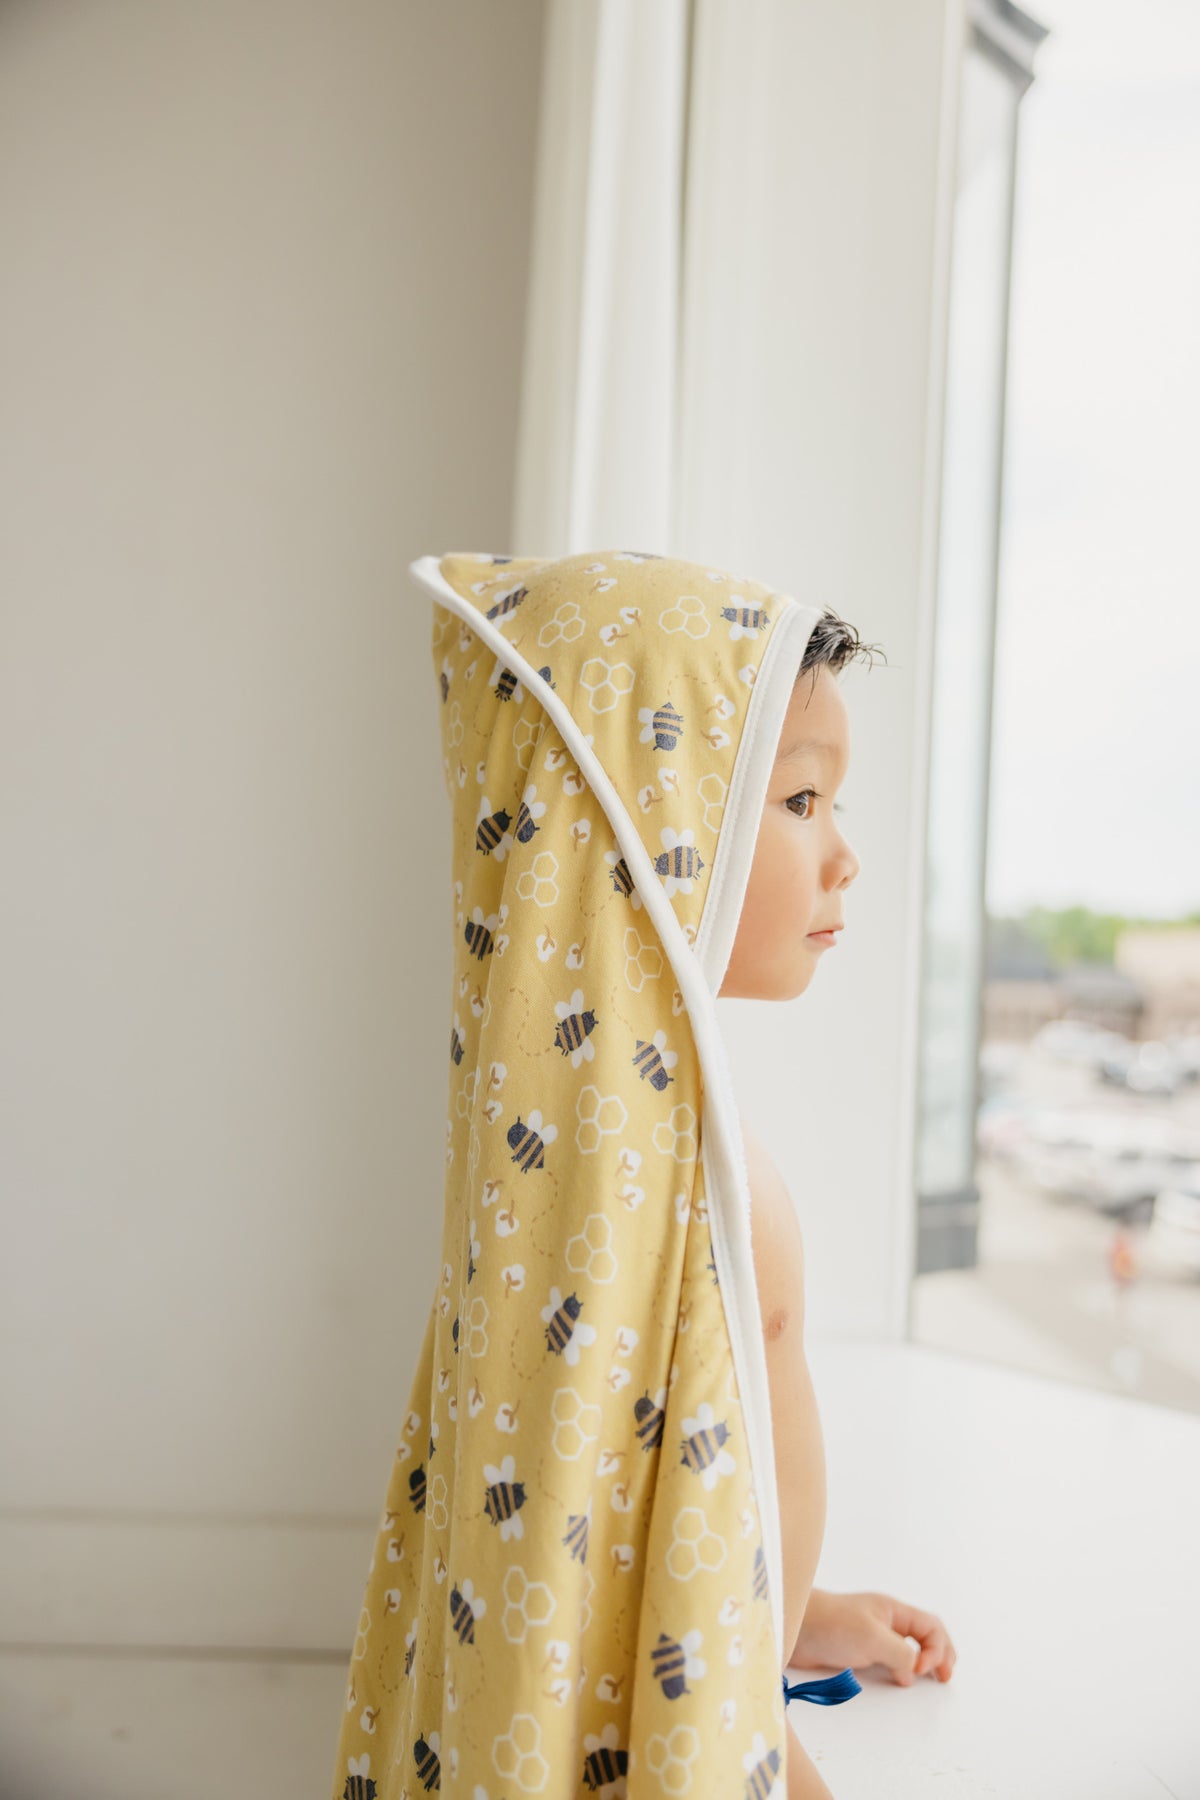 Premium Knit Hooded Towel - Honeycomb